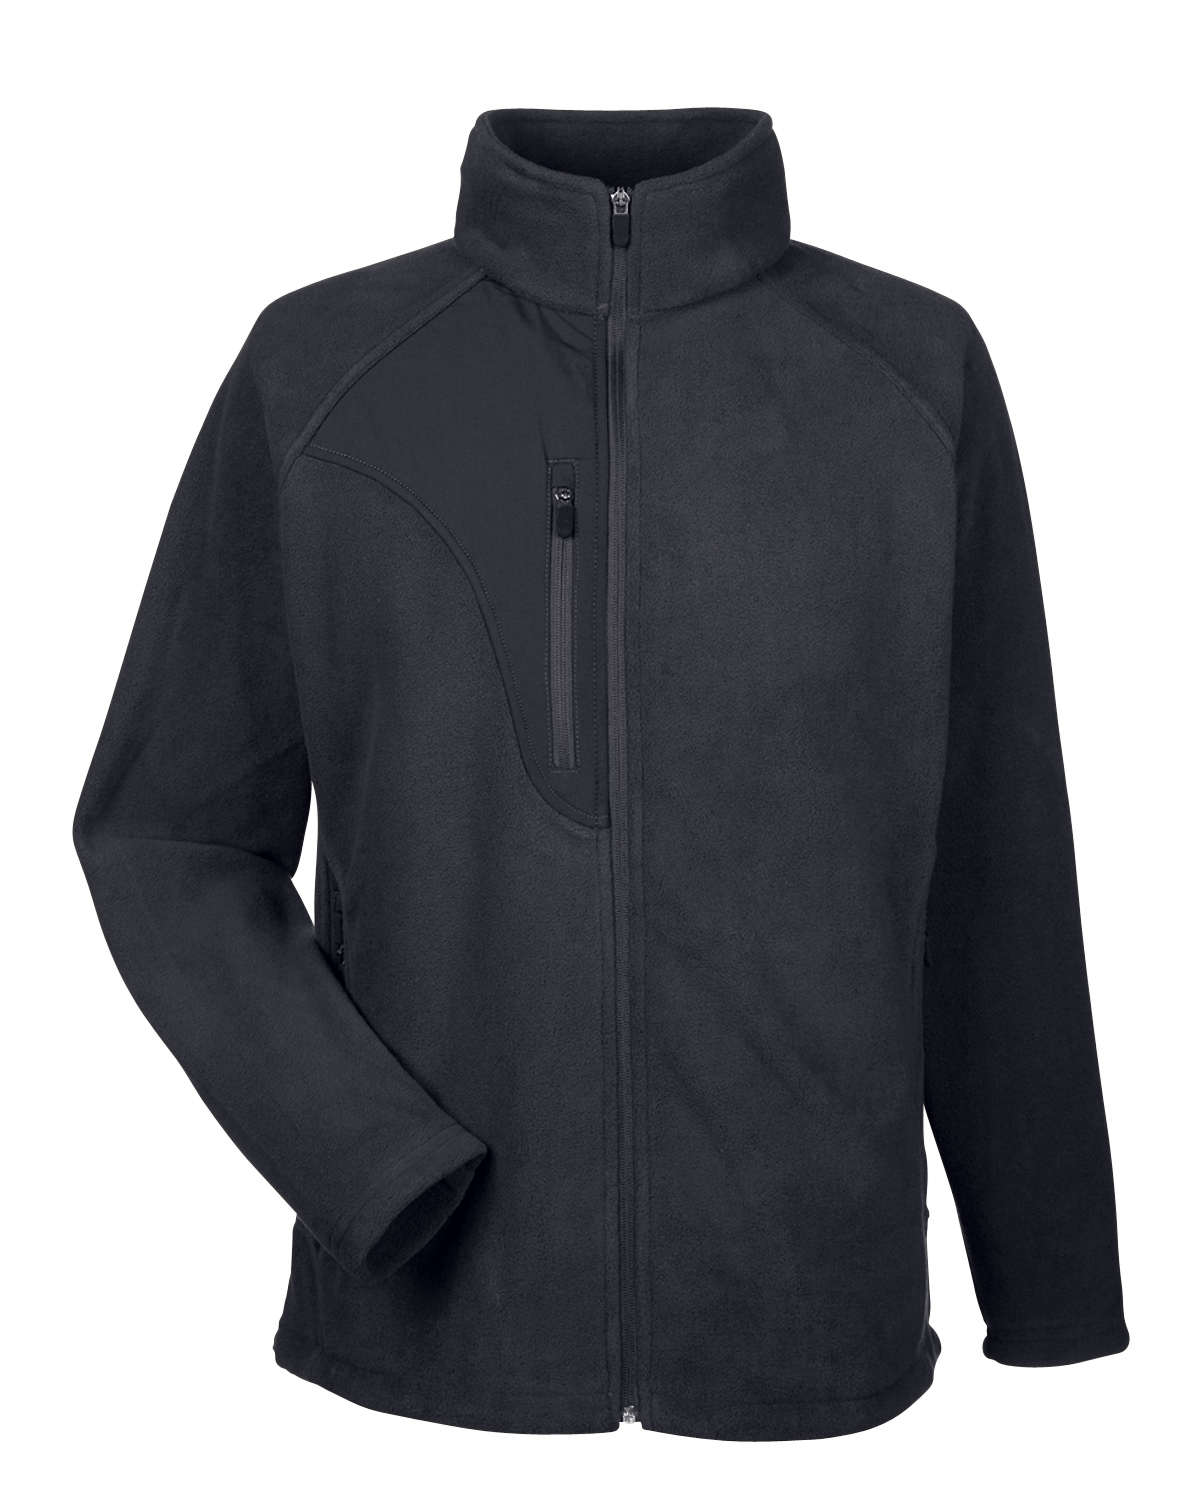 Ultra Club 8495 - Adult Full-Zip Micro-Fleece Jacket with Pocket